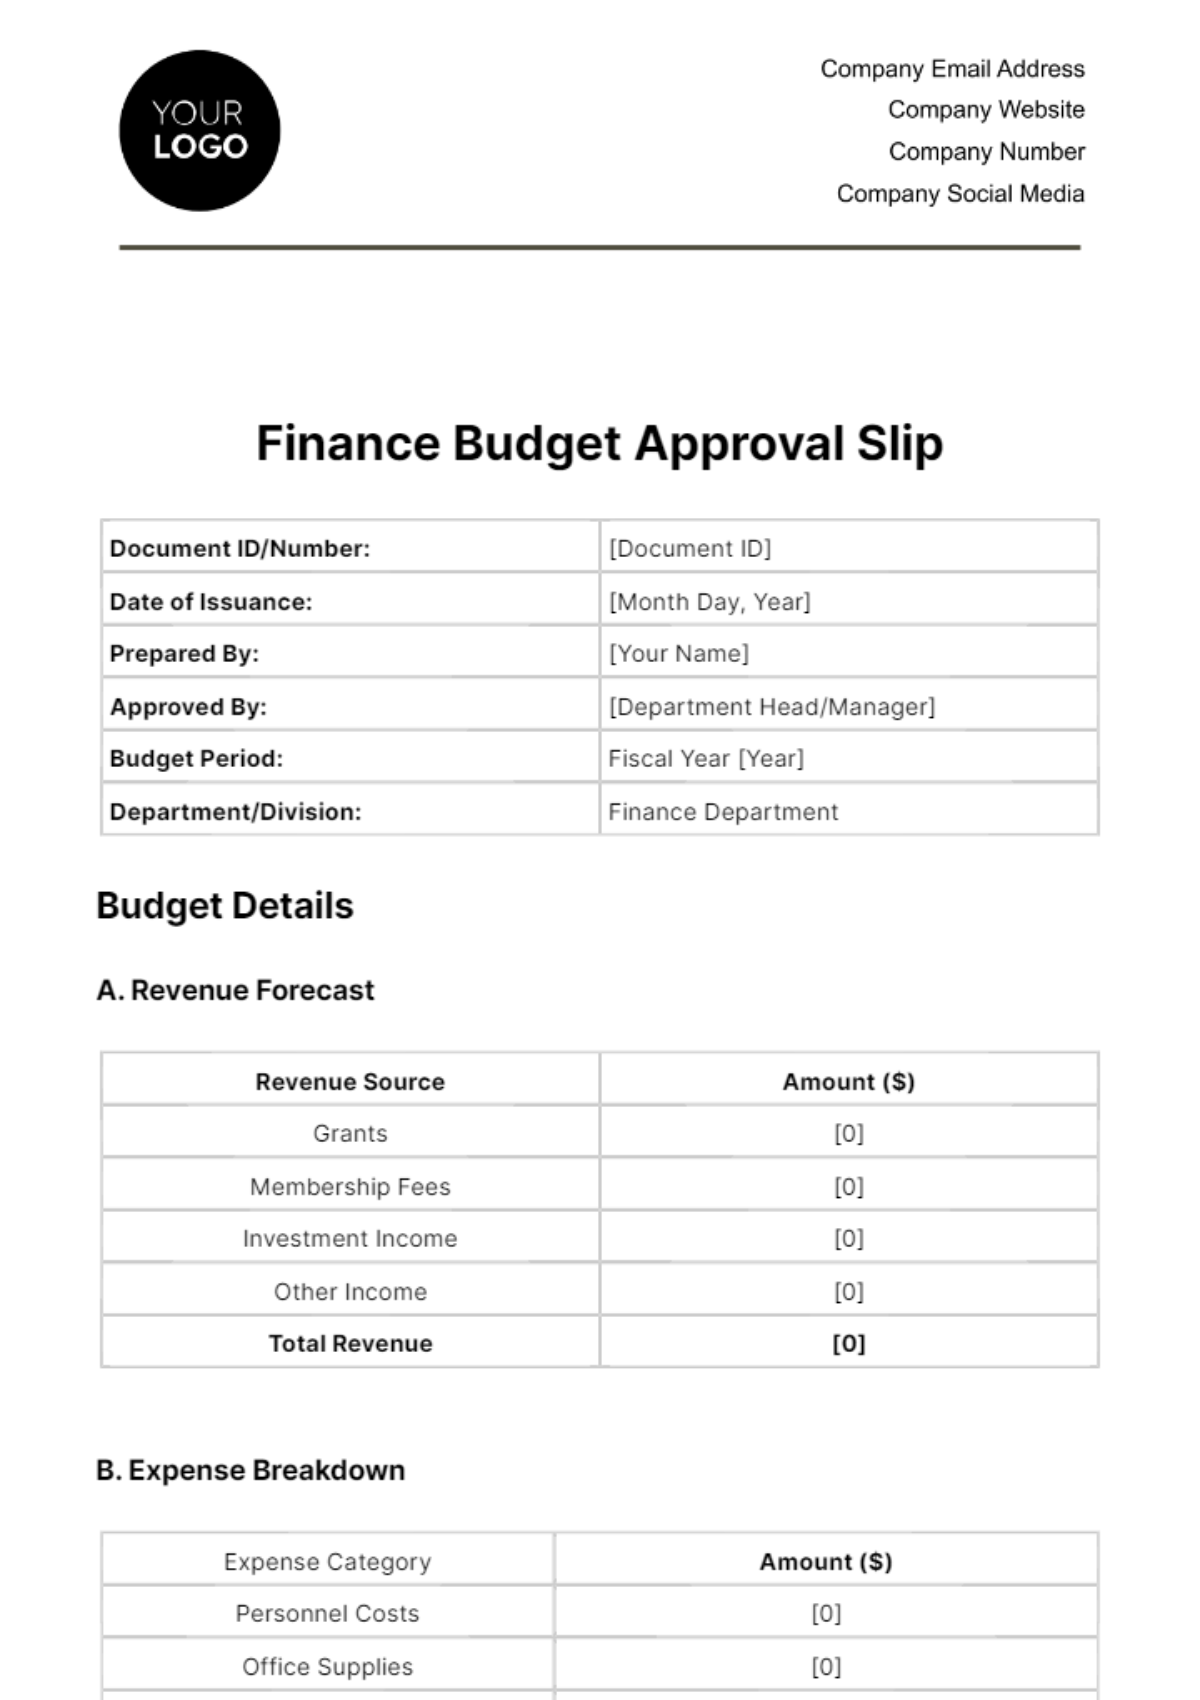 Finance Budget Approval Slip Template